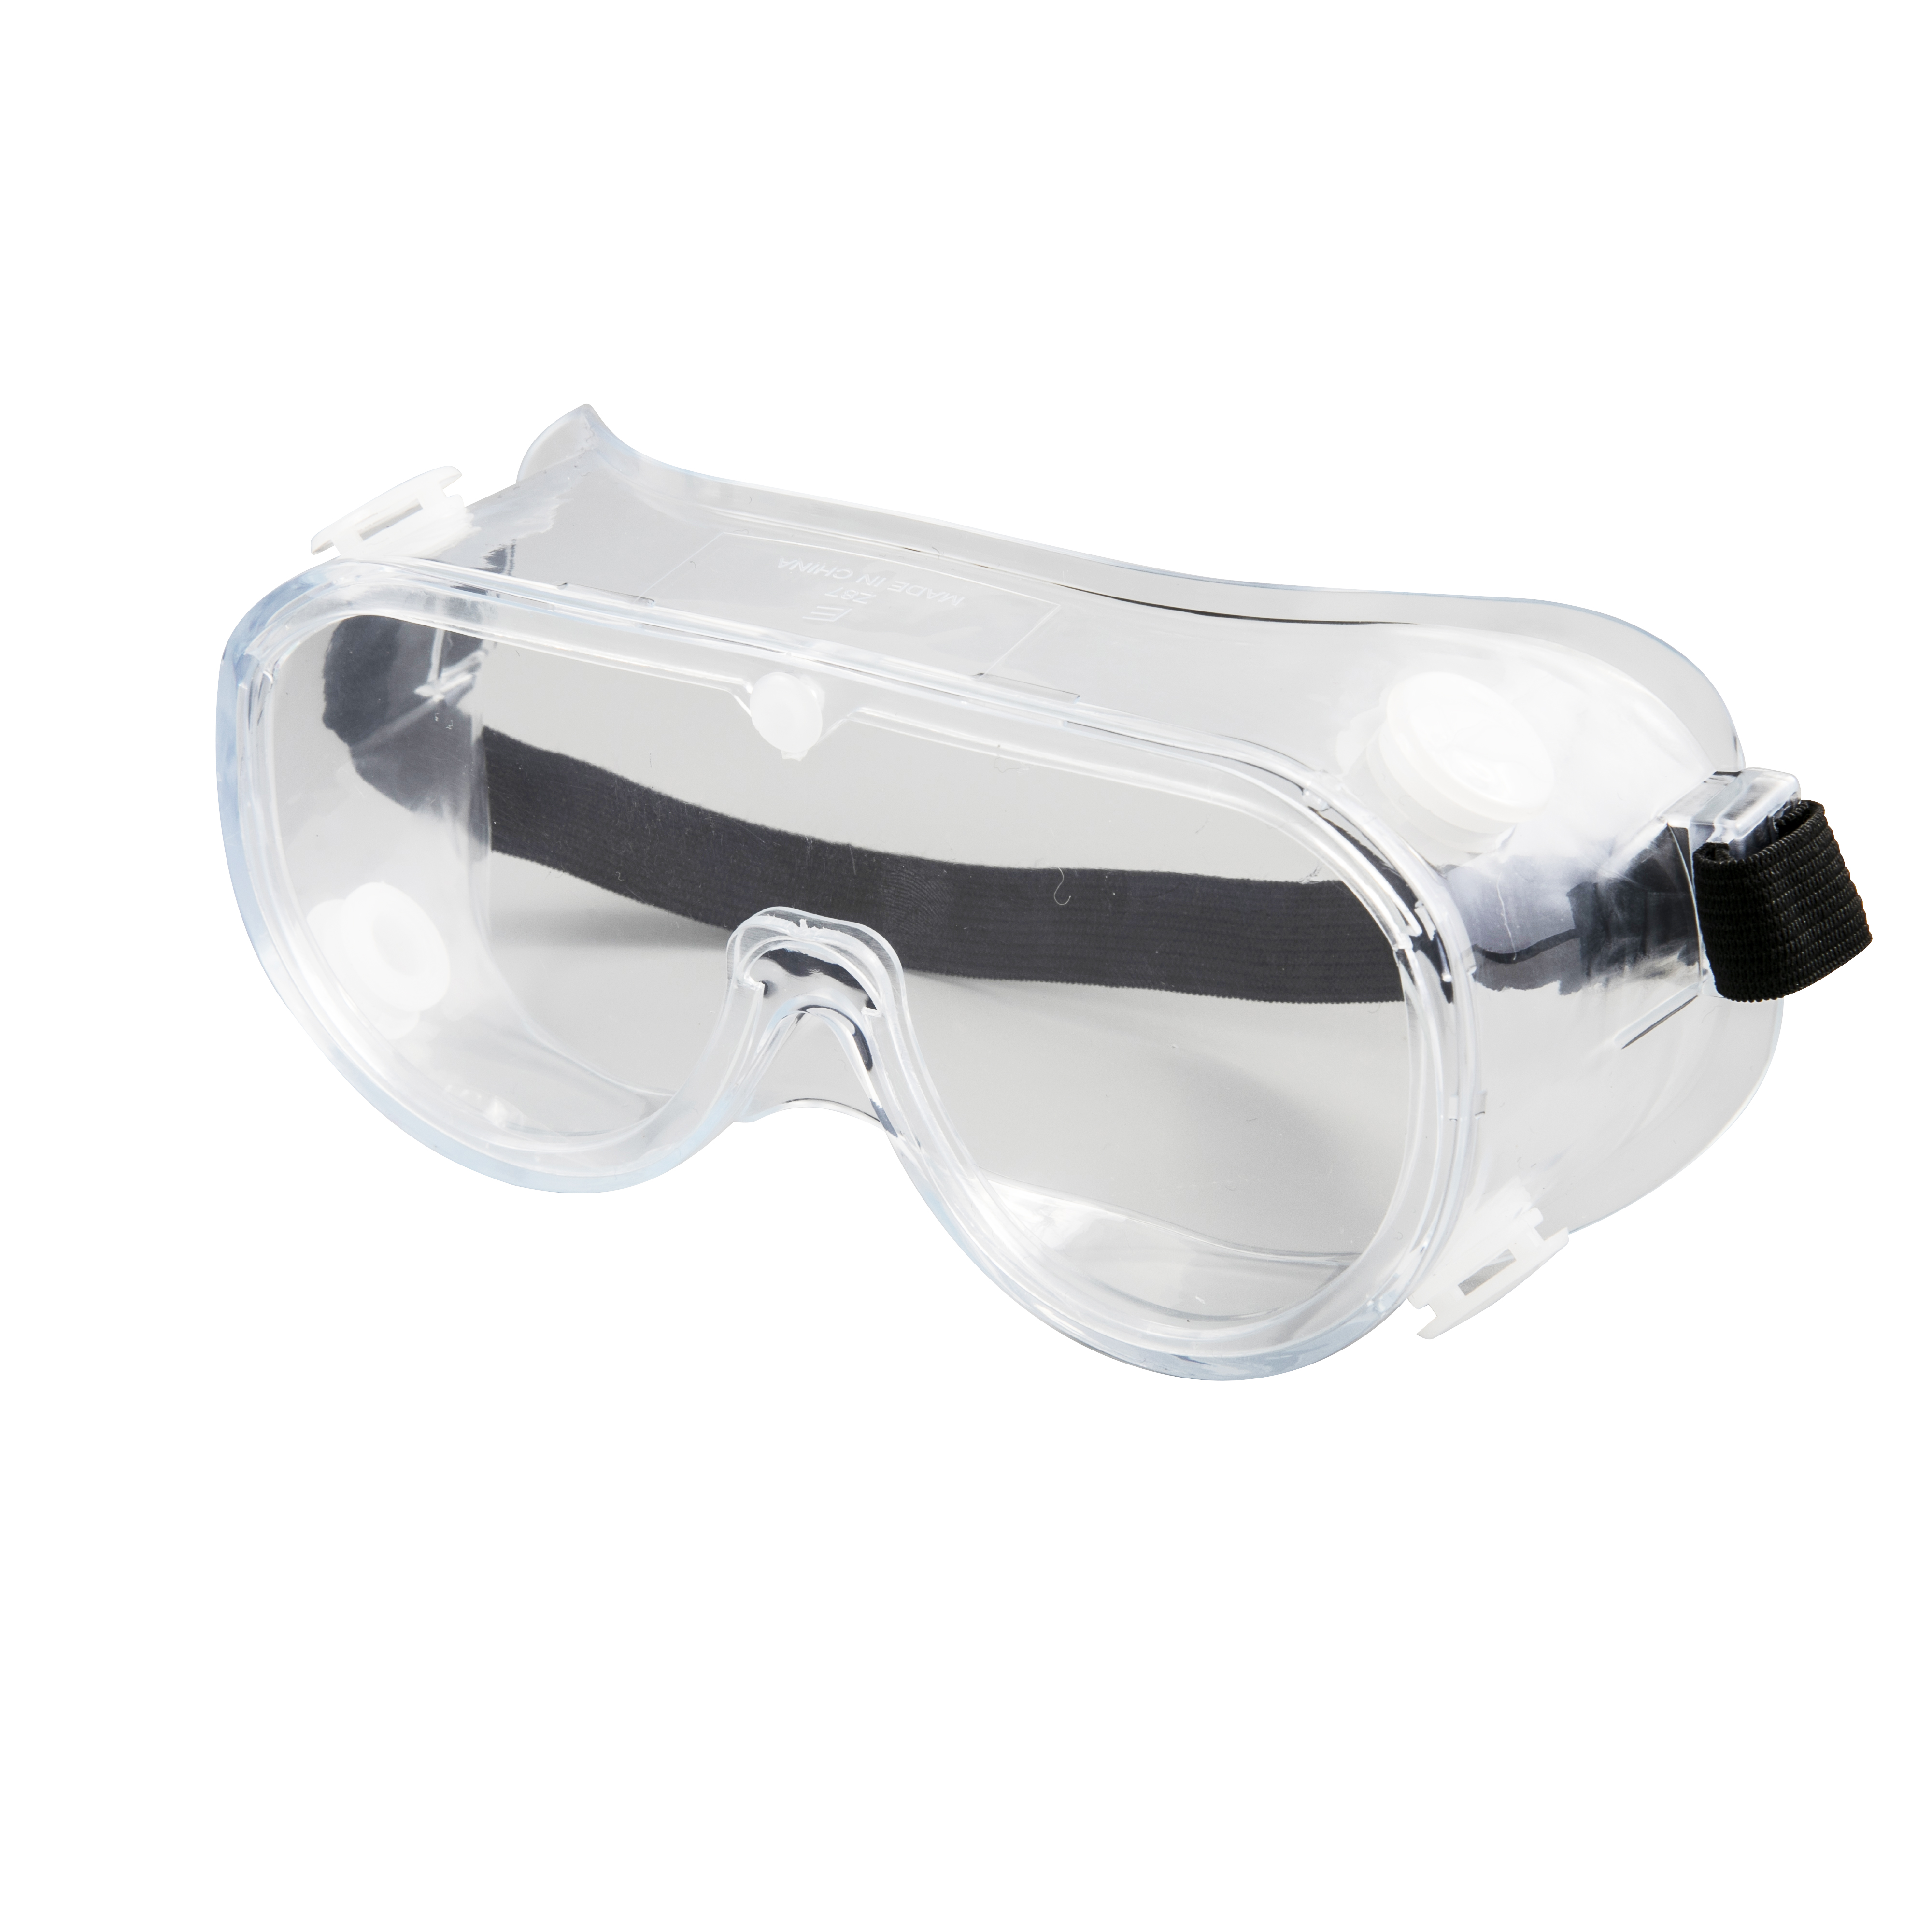 Medical Protective Antivirus Goggles